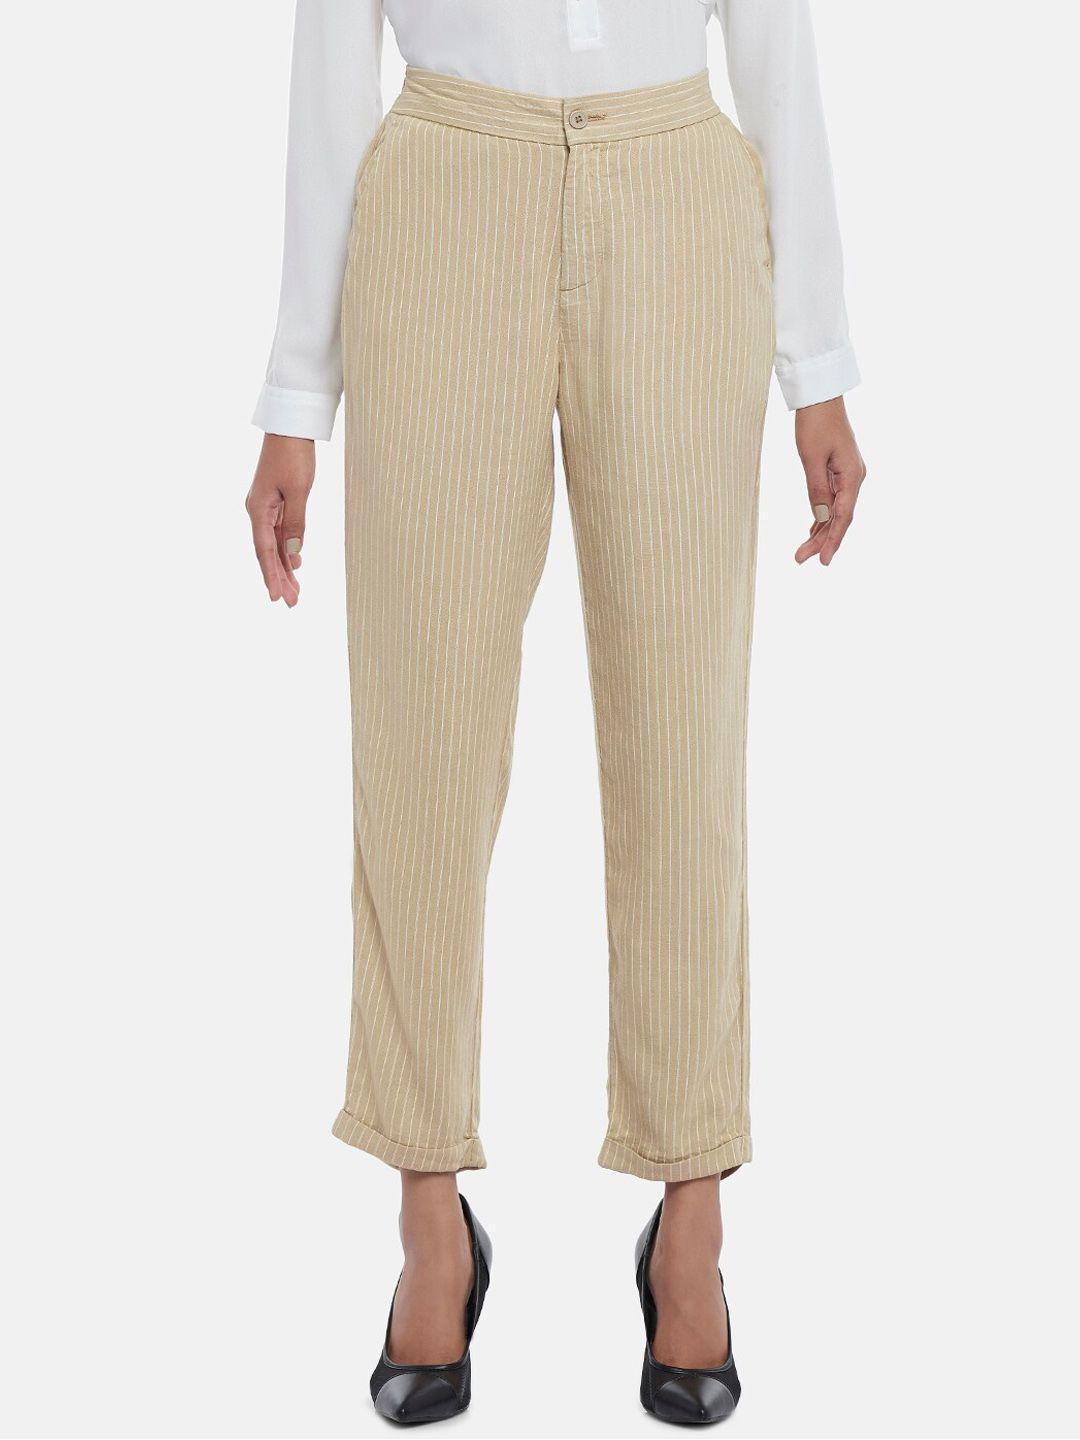 annabelle by pantaloons women beige striped trousers